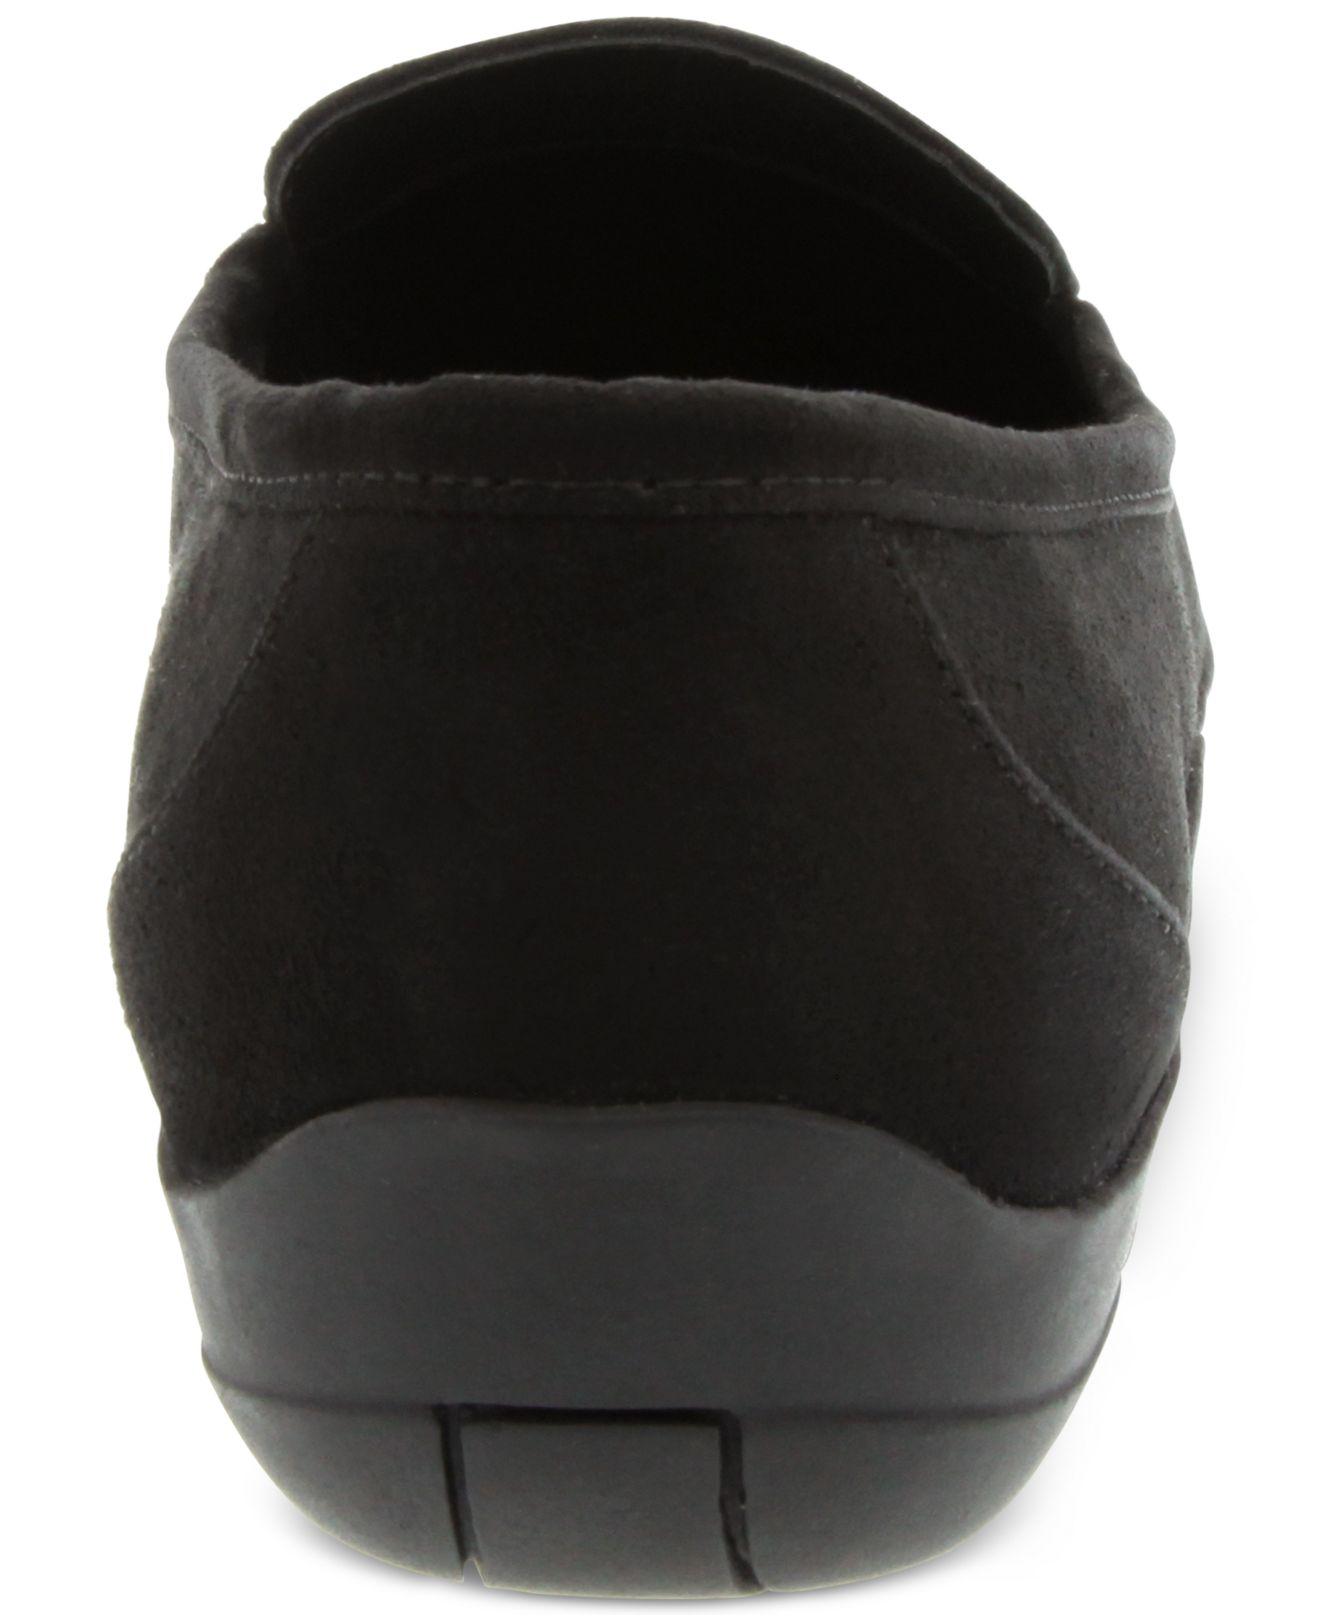 Karen Scott Womens Jodie Square Toe Loafers, Black, Size 9.0 | eBay